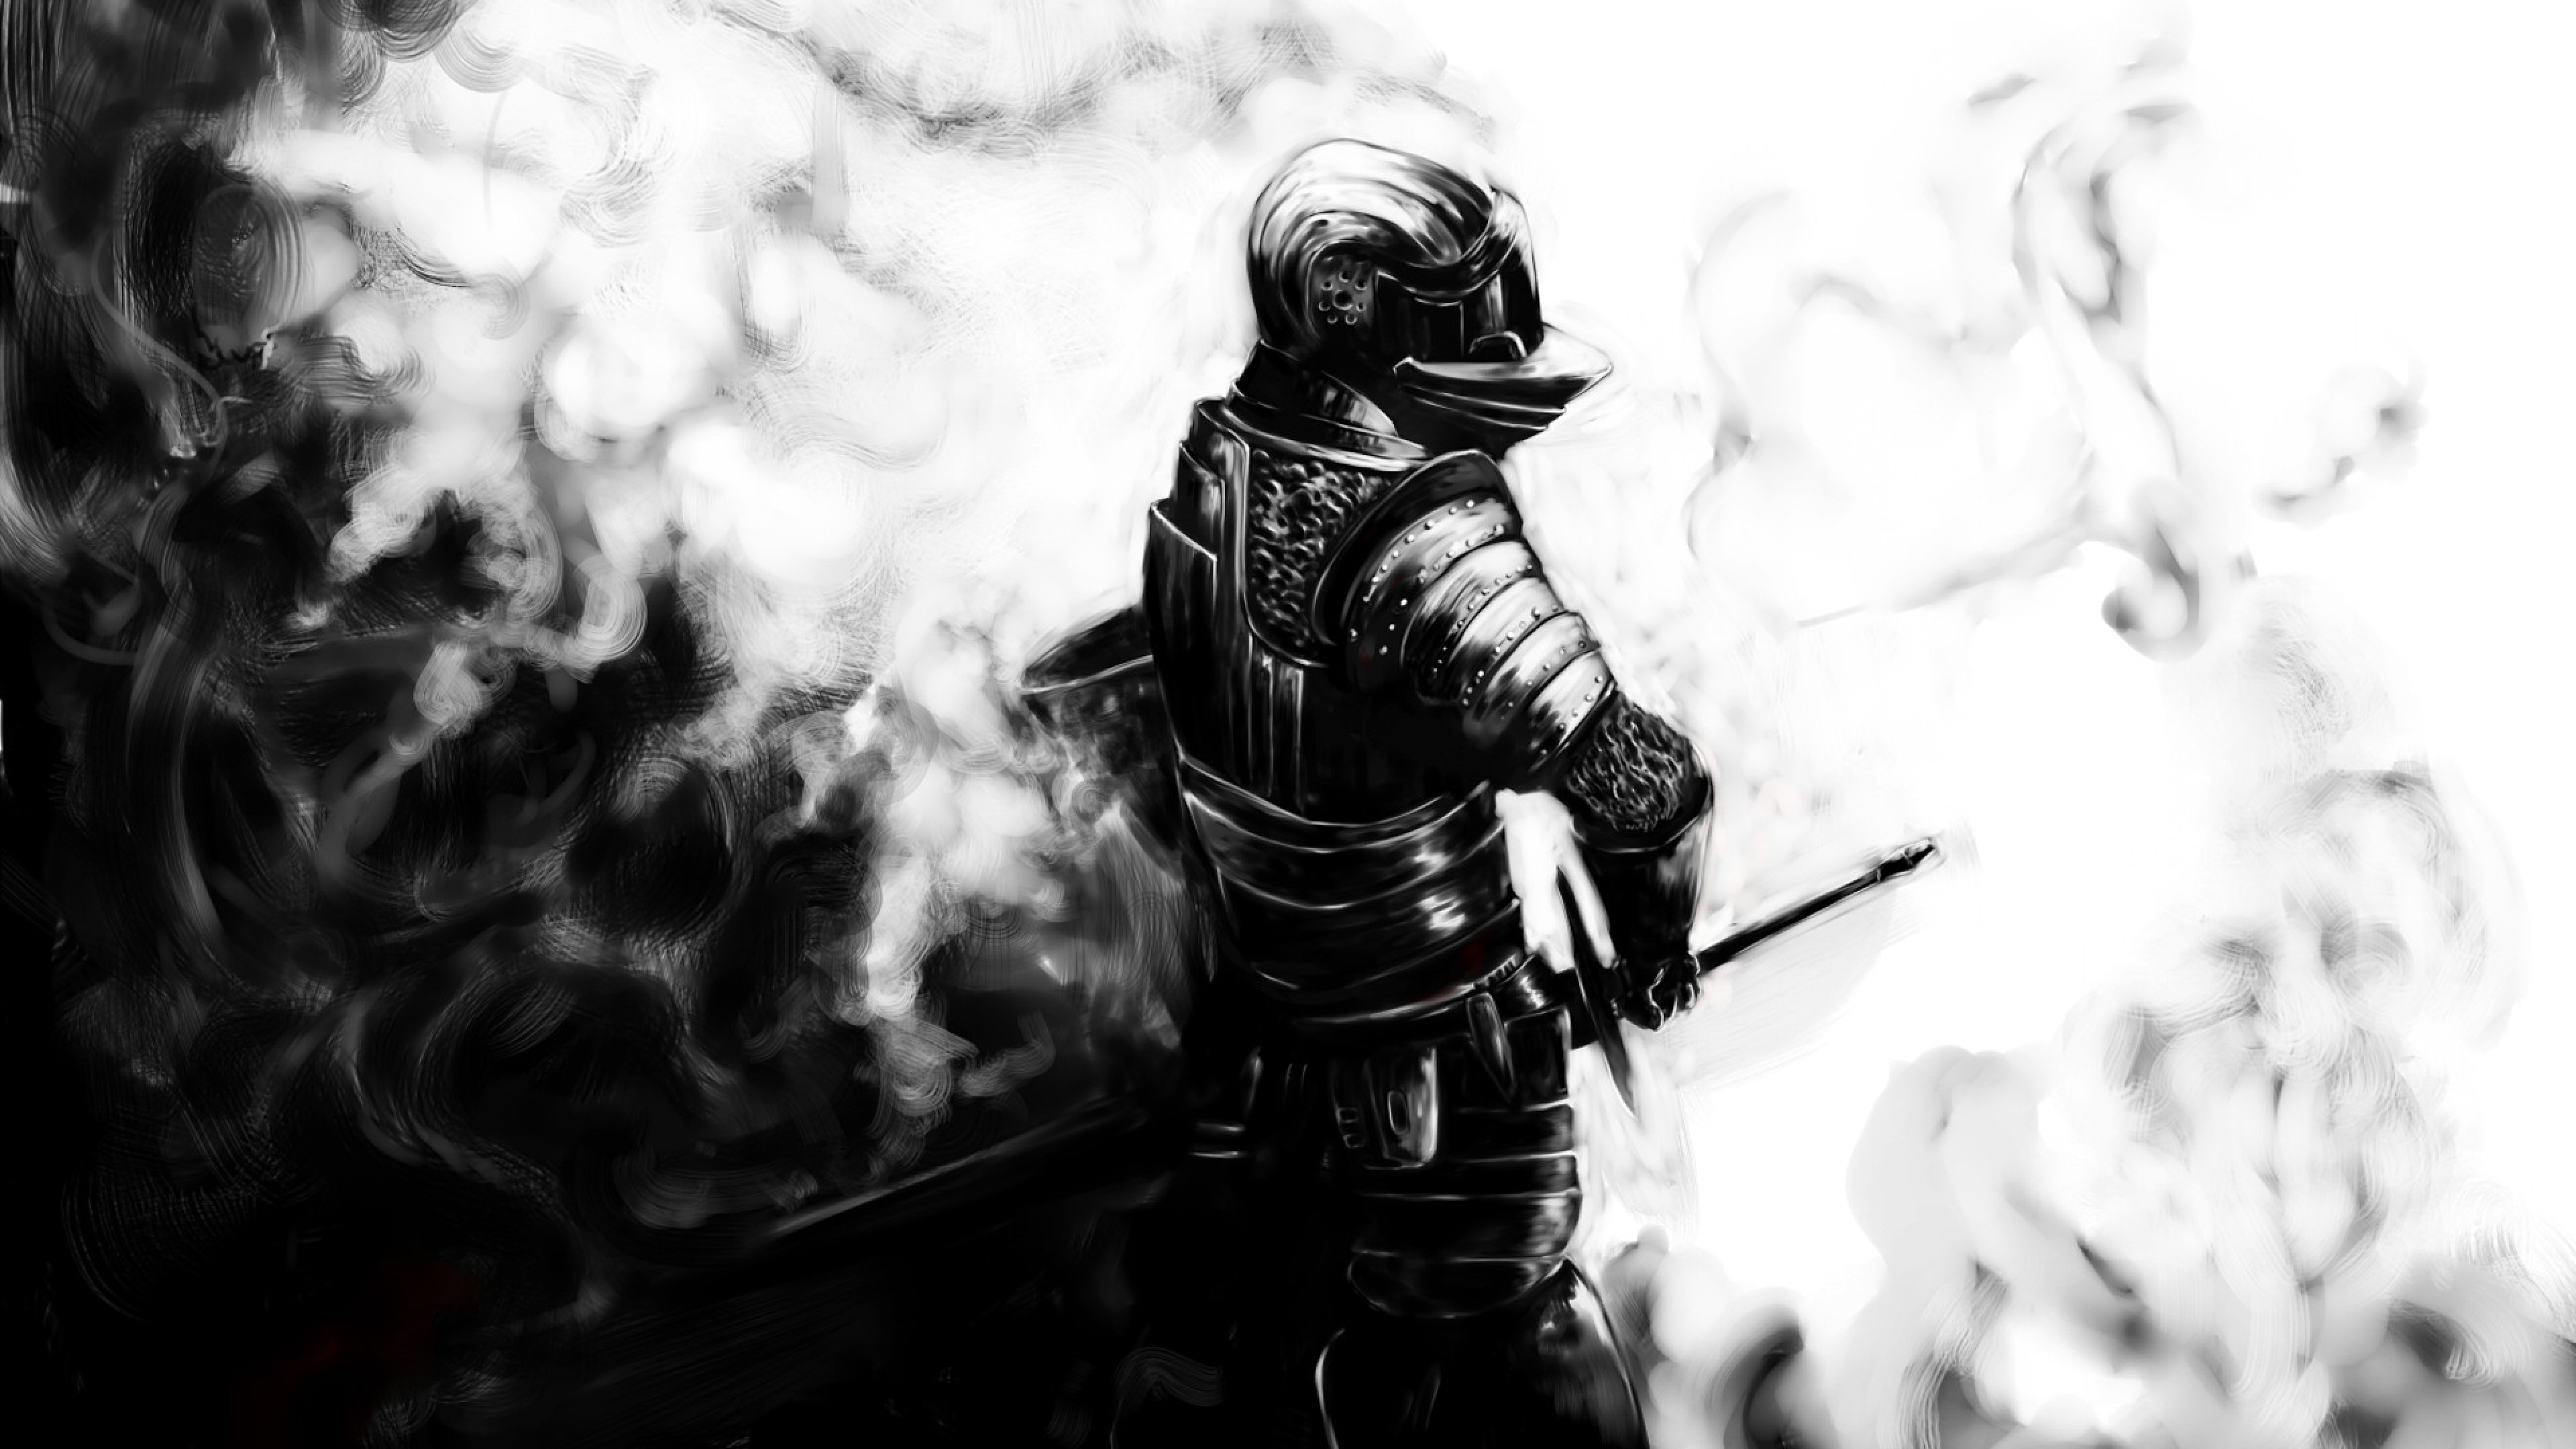  Dark souls Knight Sword Armor Helmet Wallpaper Background 4K 3840x2160